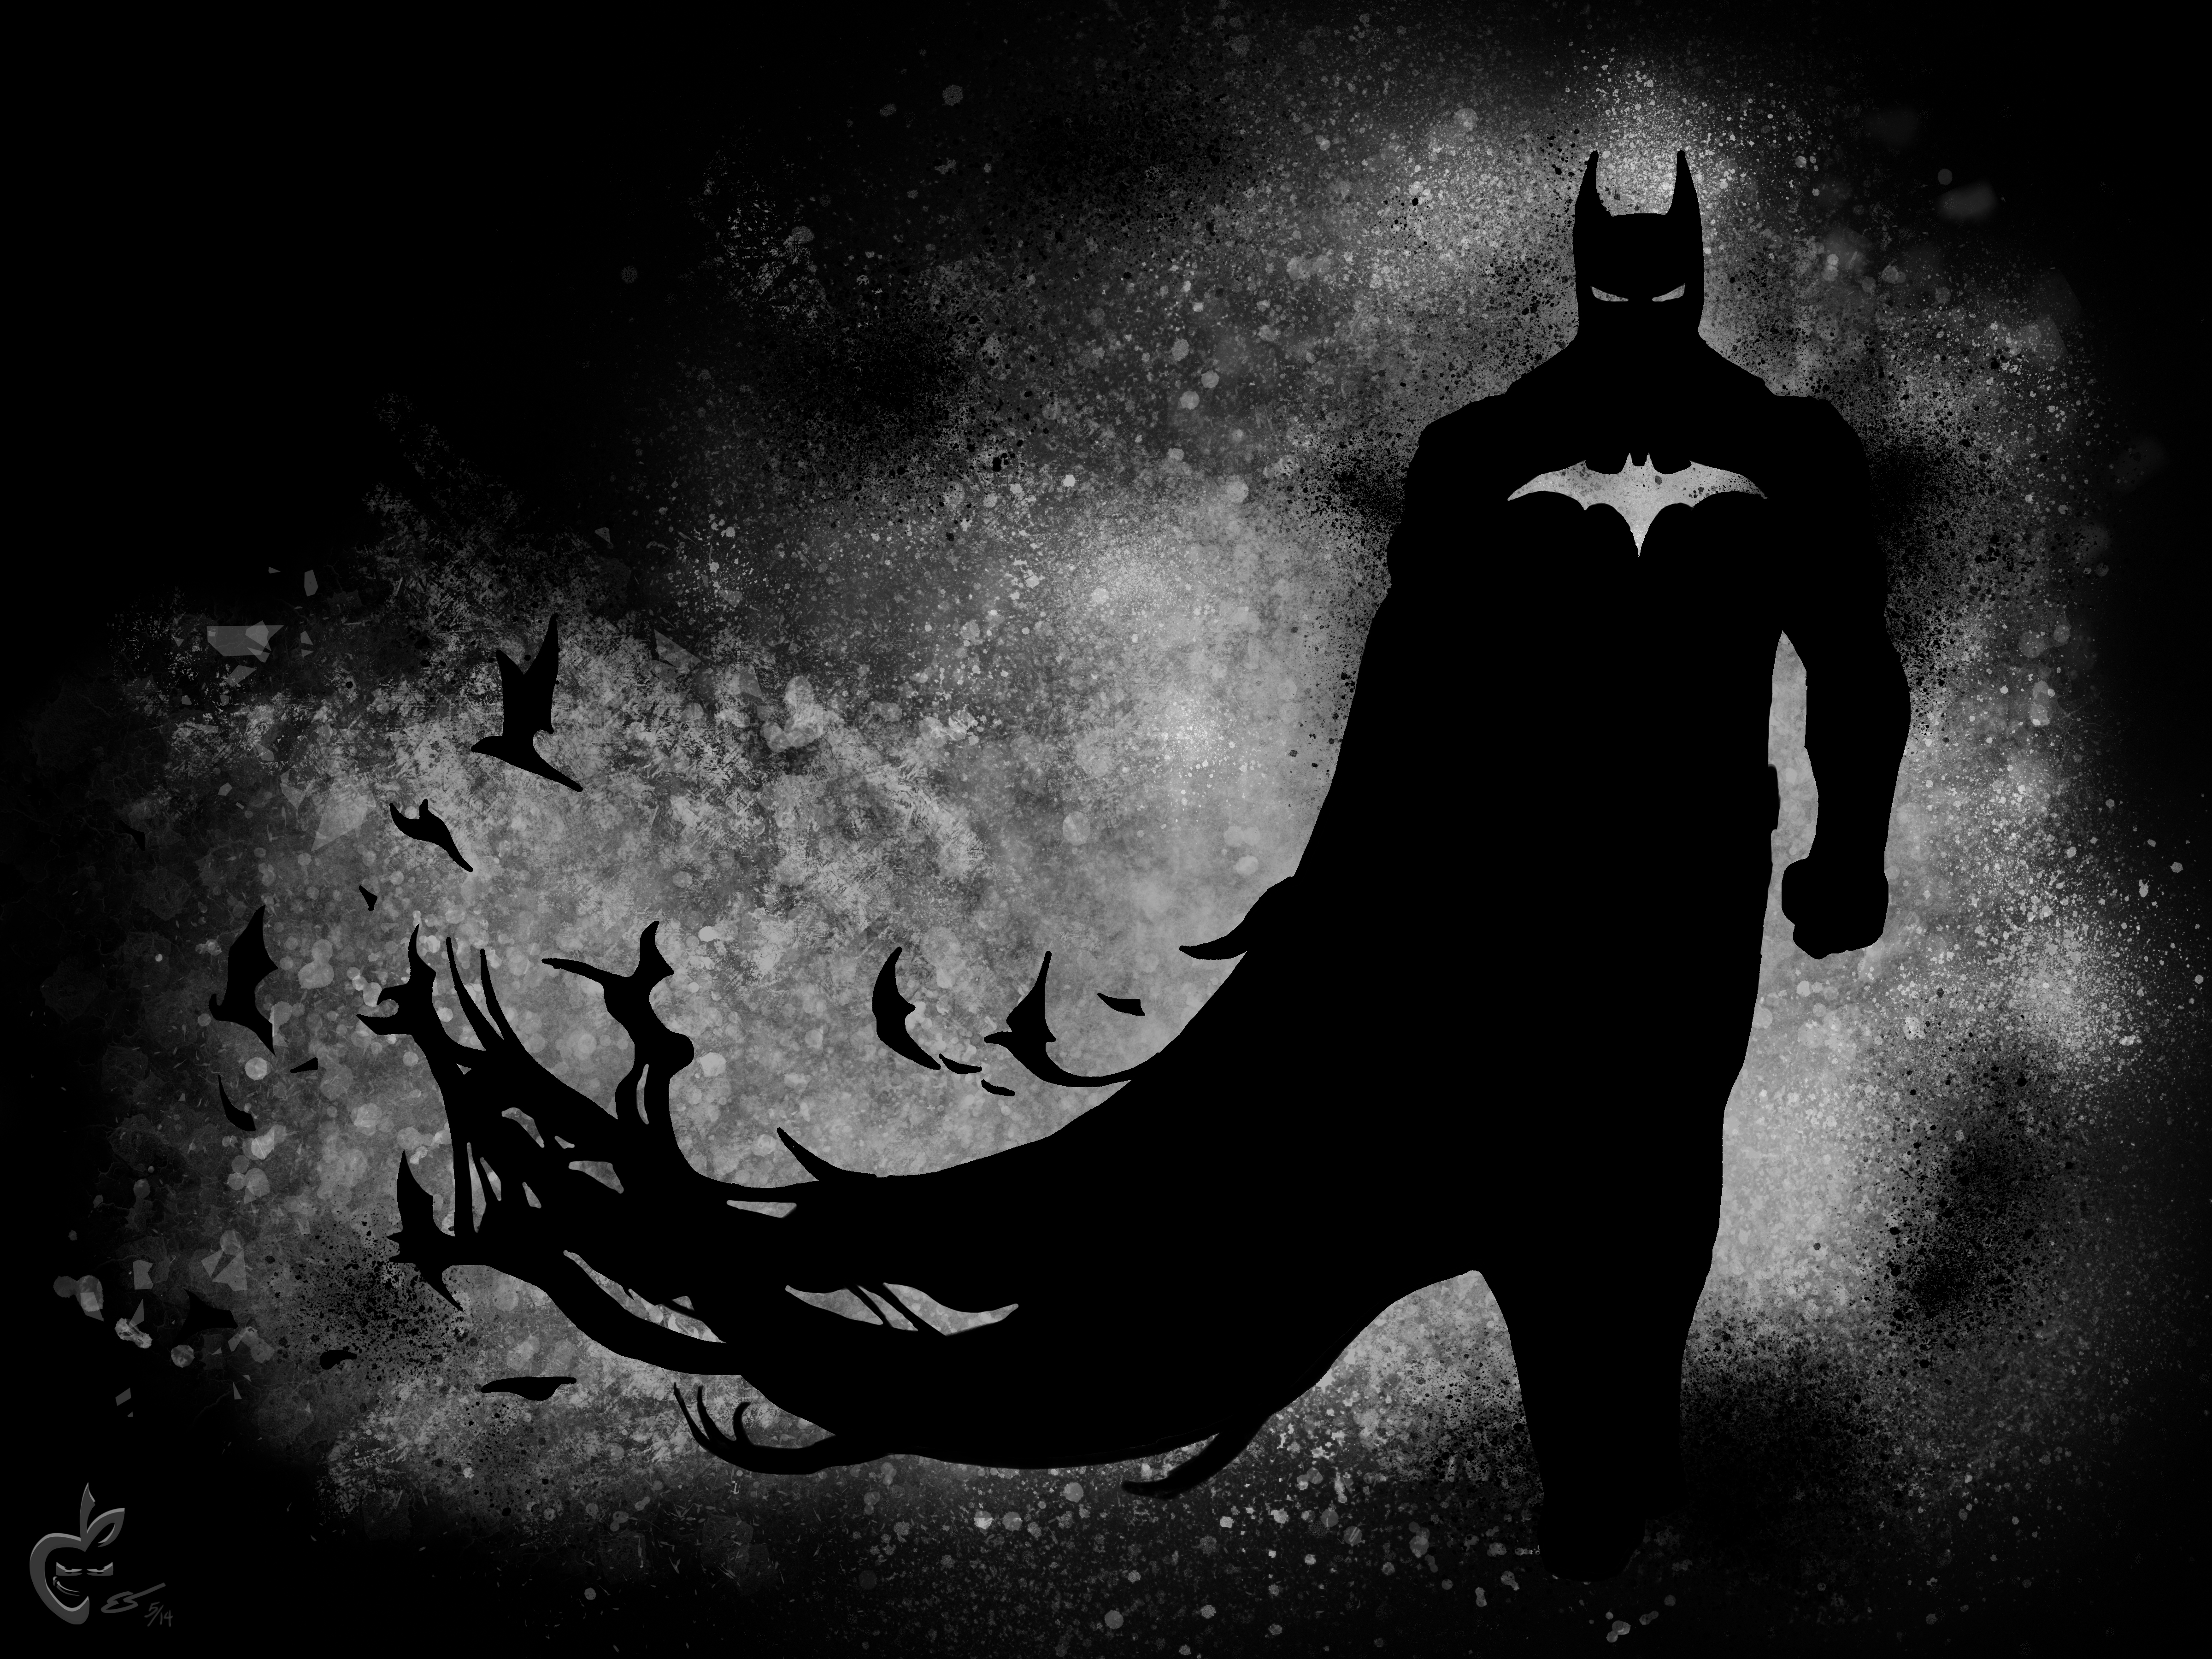 Download DC Comics Comic Batman 4k Ultra HD Wallpaper by Esteban Salinas